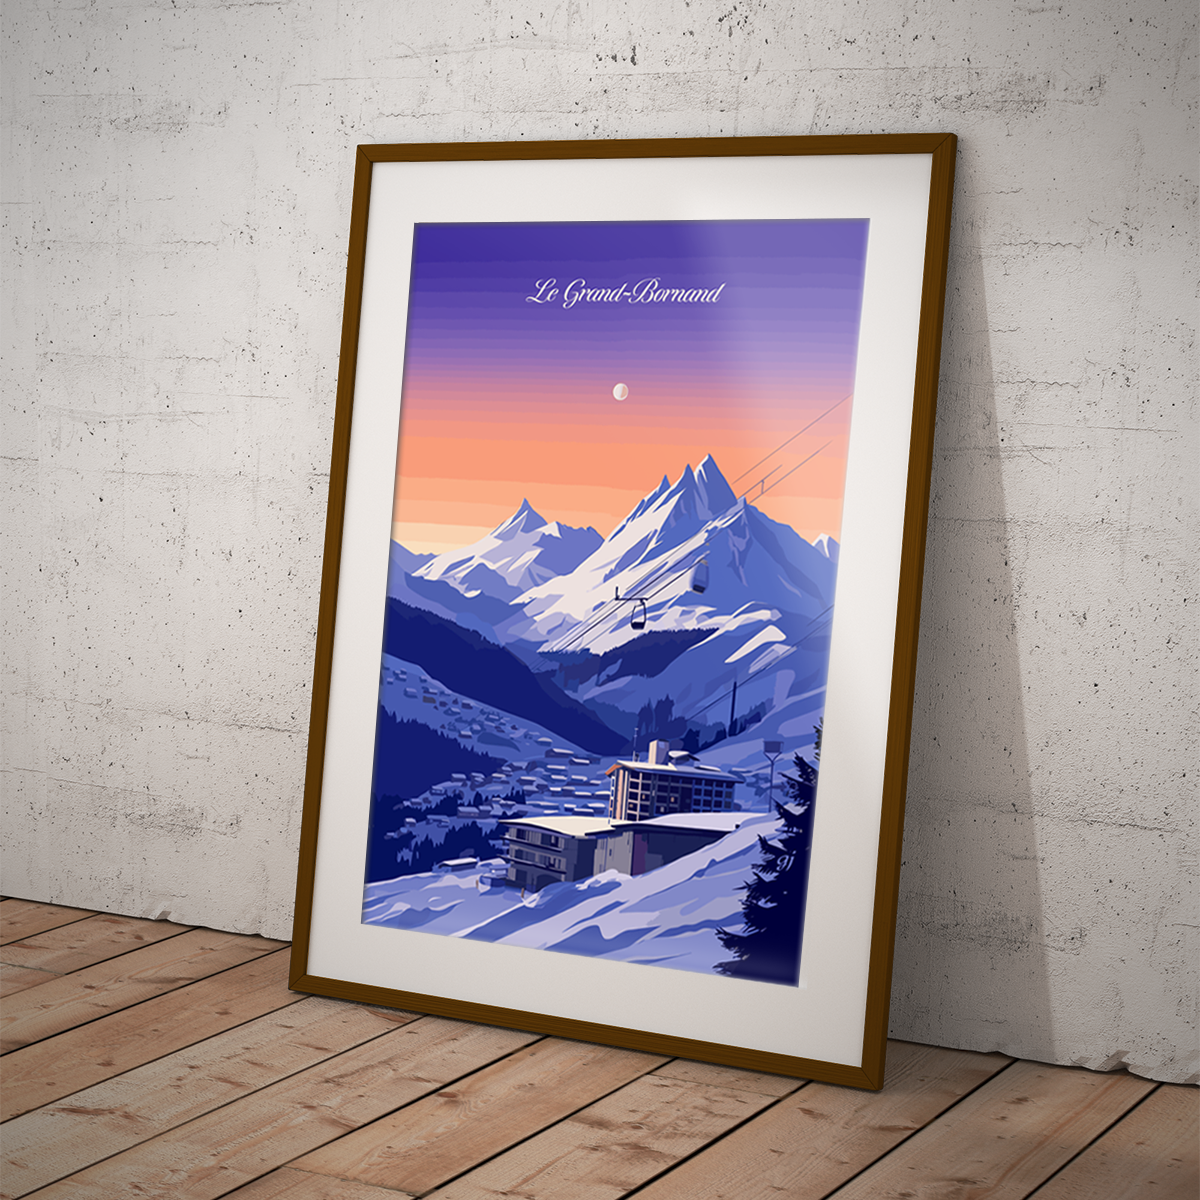 Le Grand Bornant poster by bon voyage design